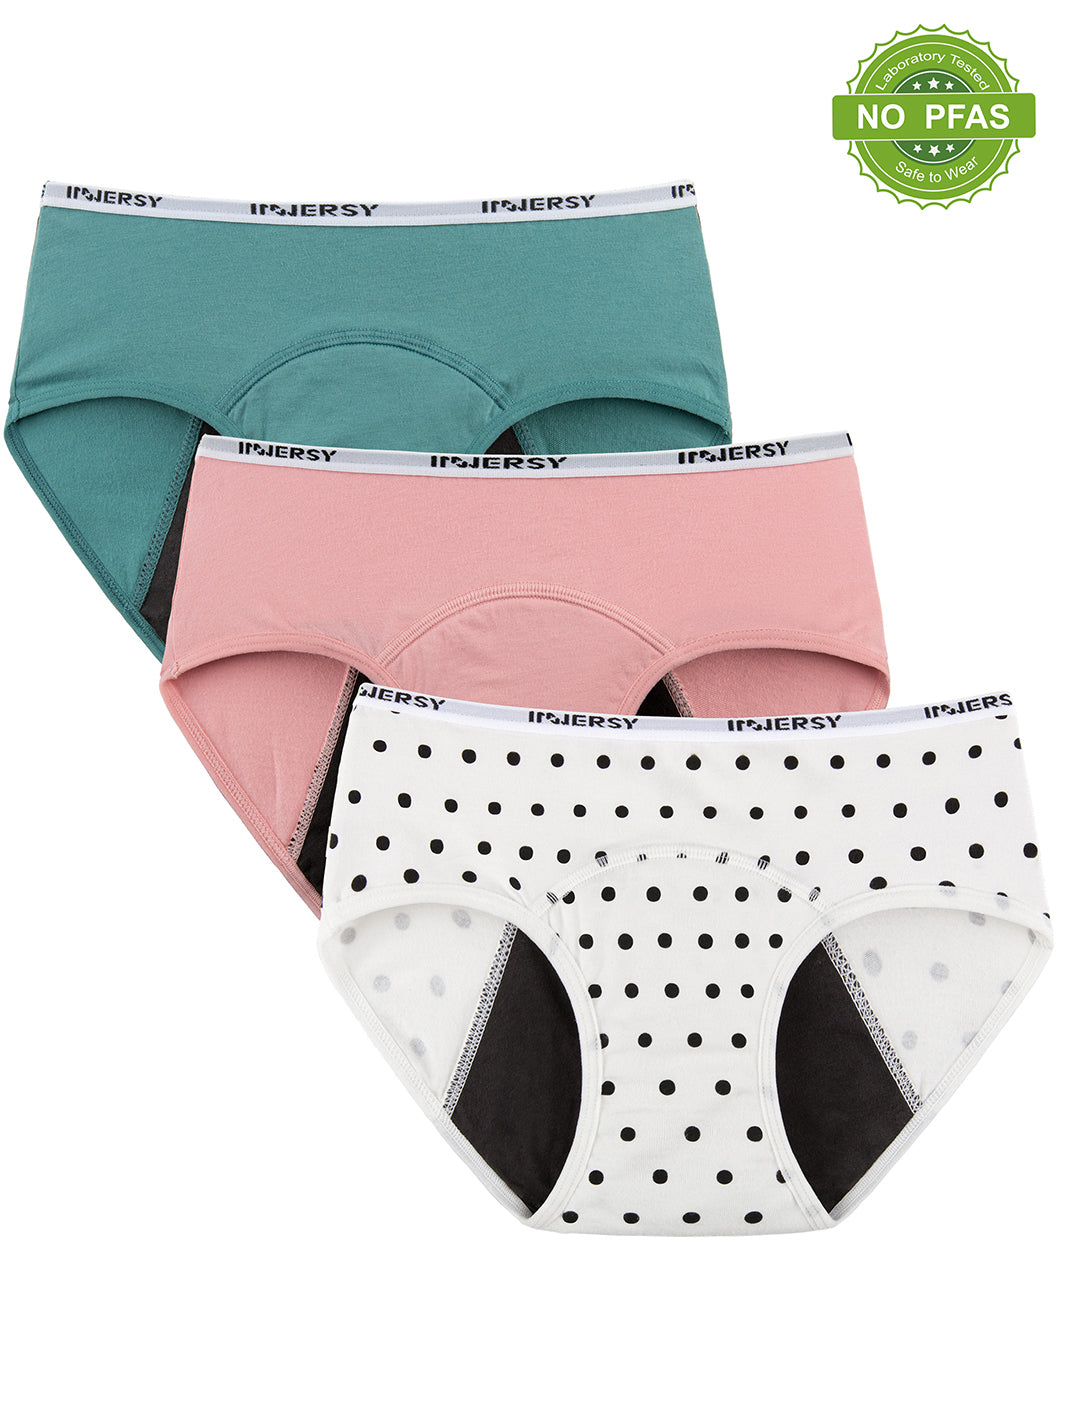 Girls' Panties Menstrual Period Panties Protective Cotton Hipster Panties  Underwear 